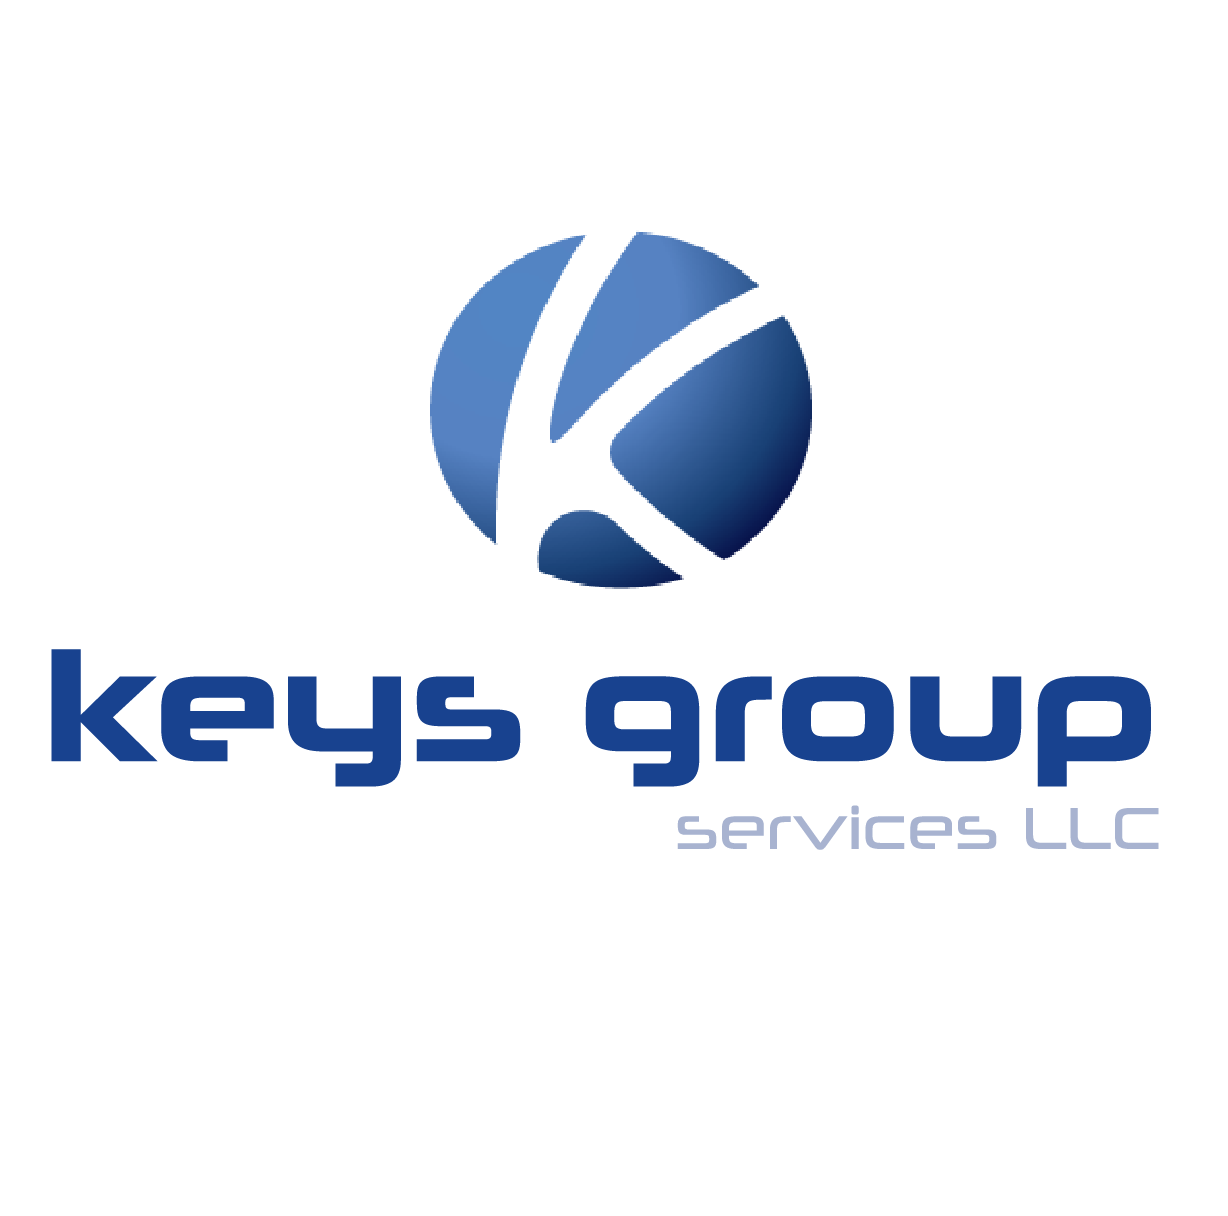 Keys group